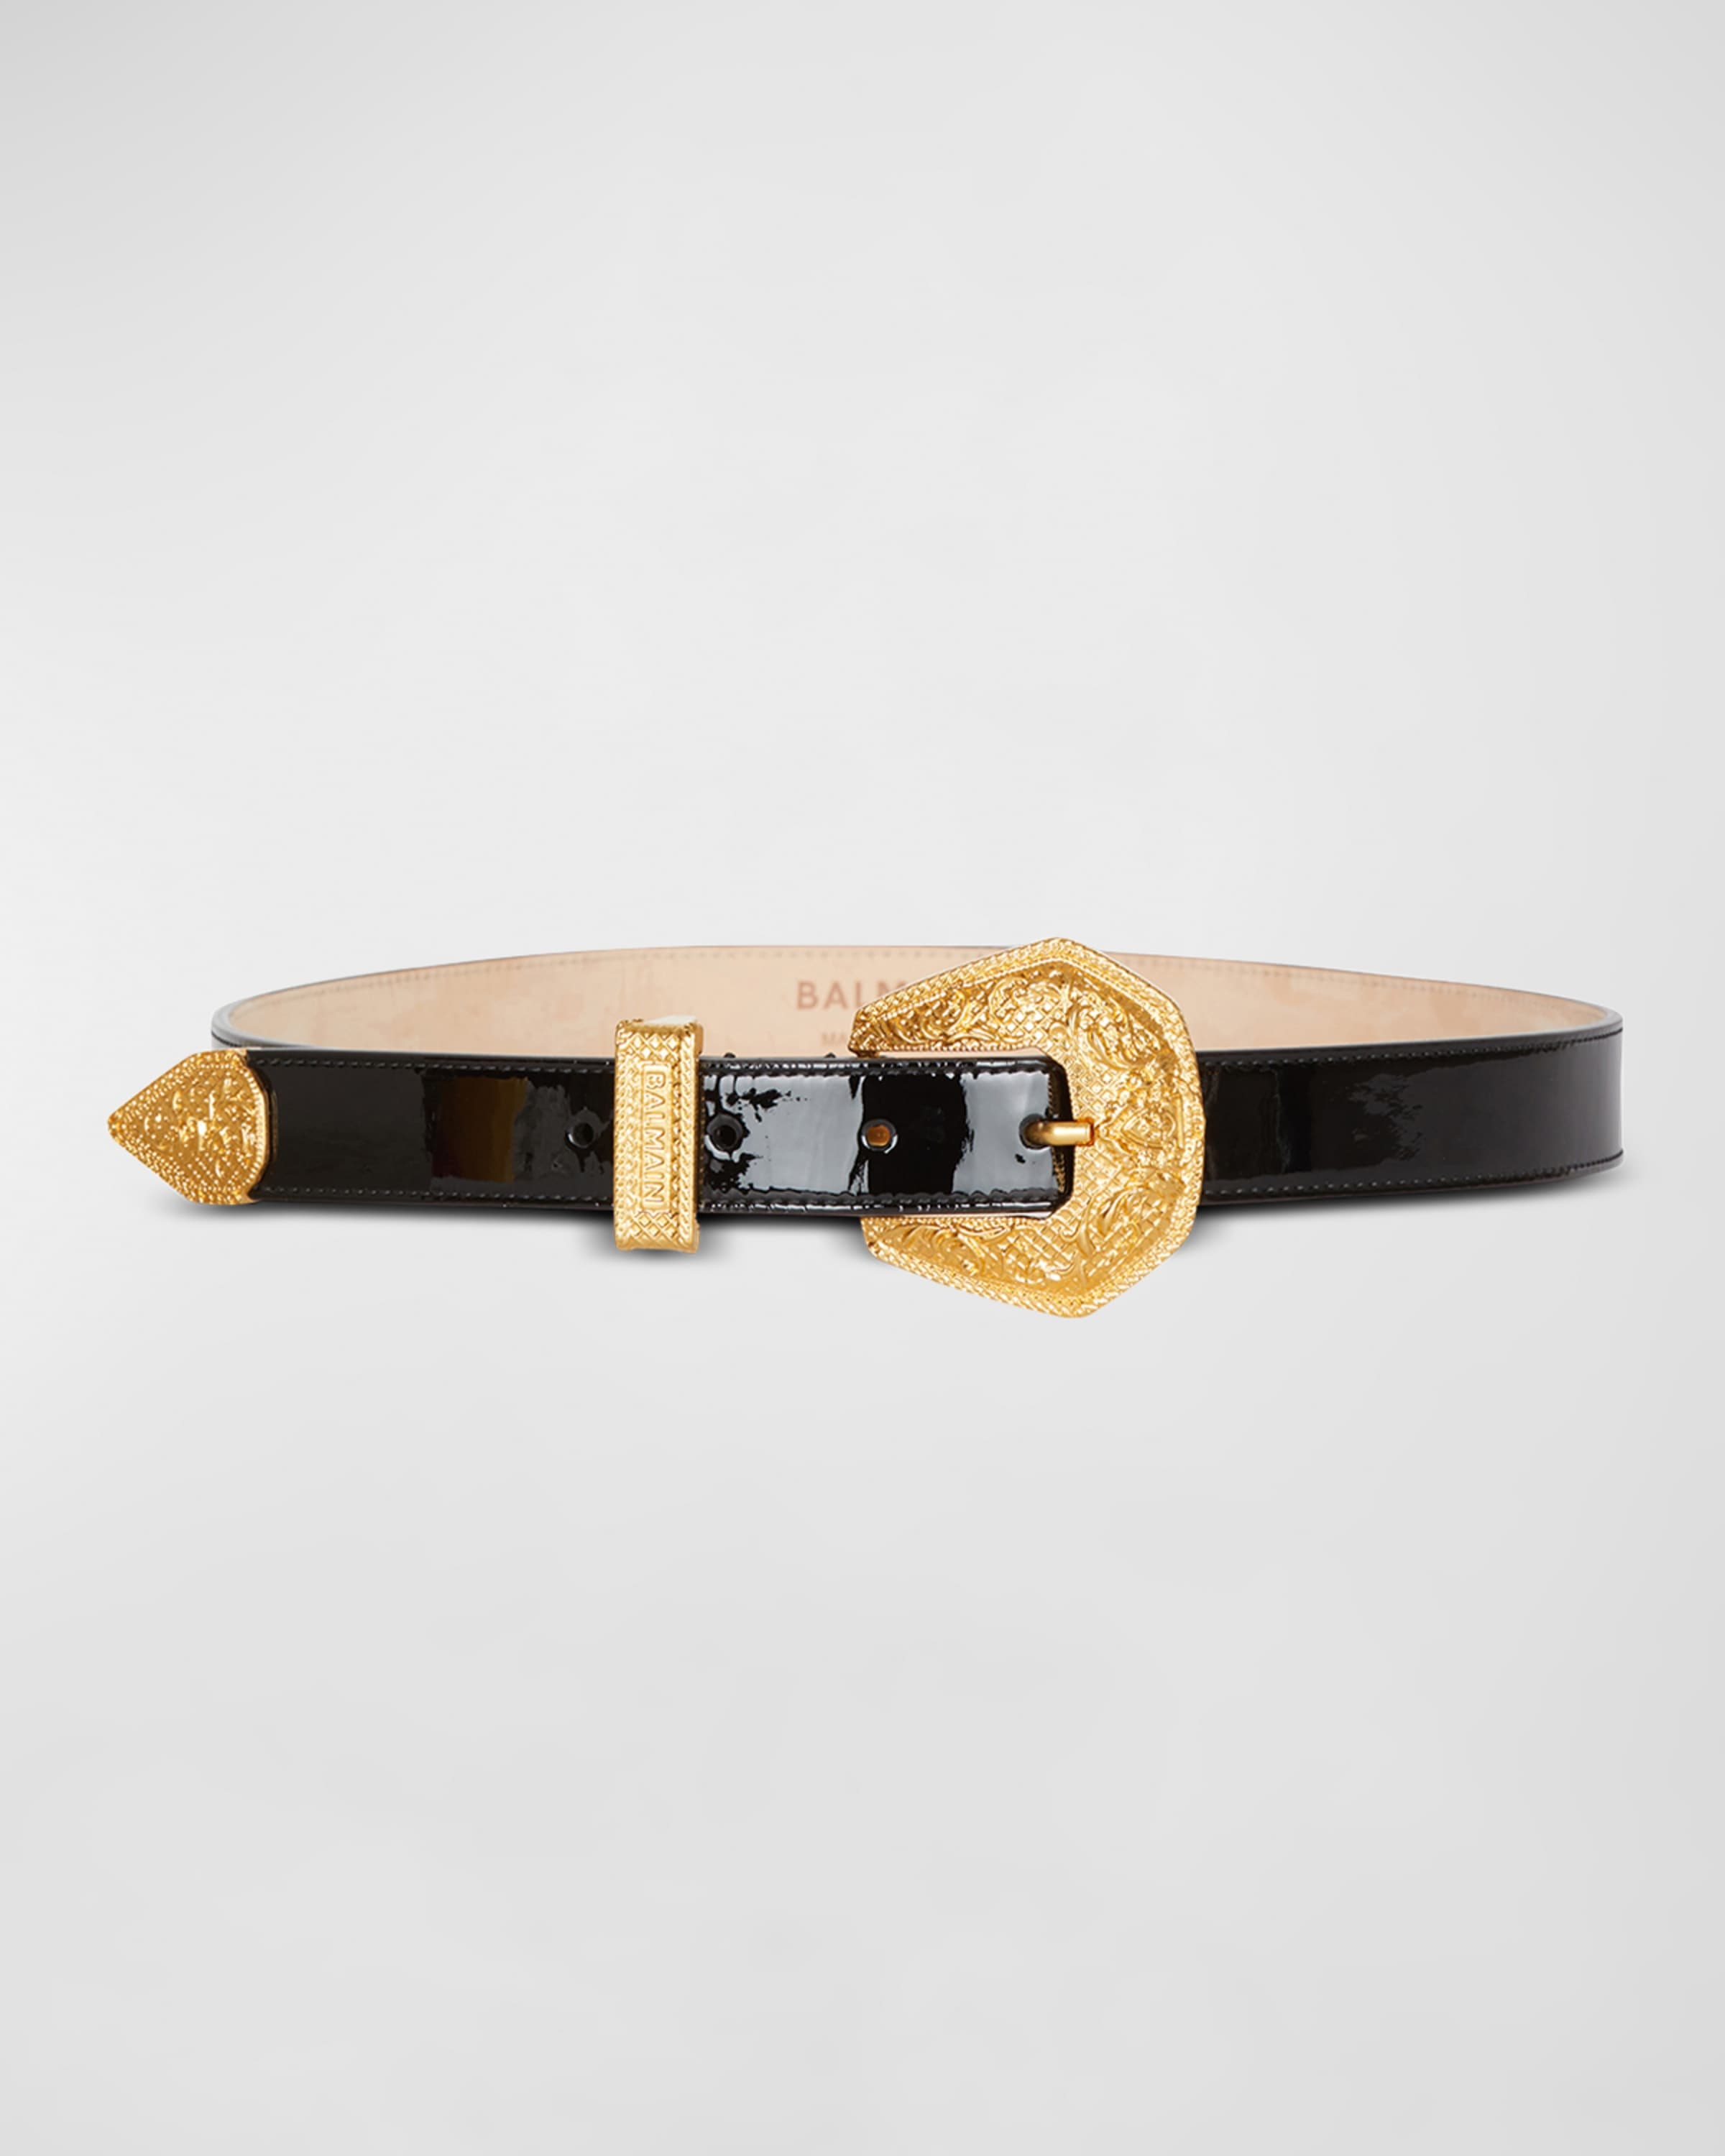 Western Patent Leather & Brass Belt - 1